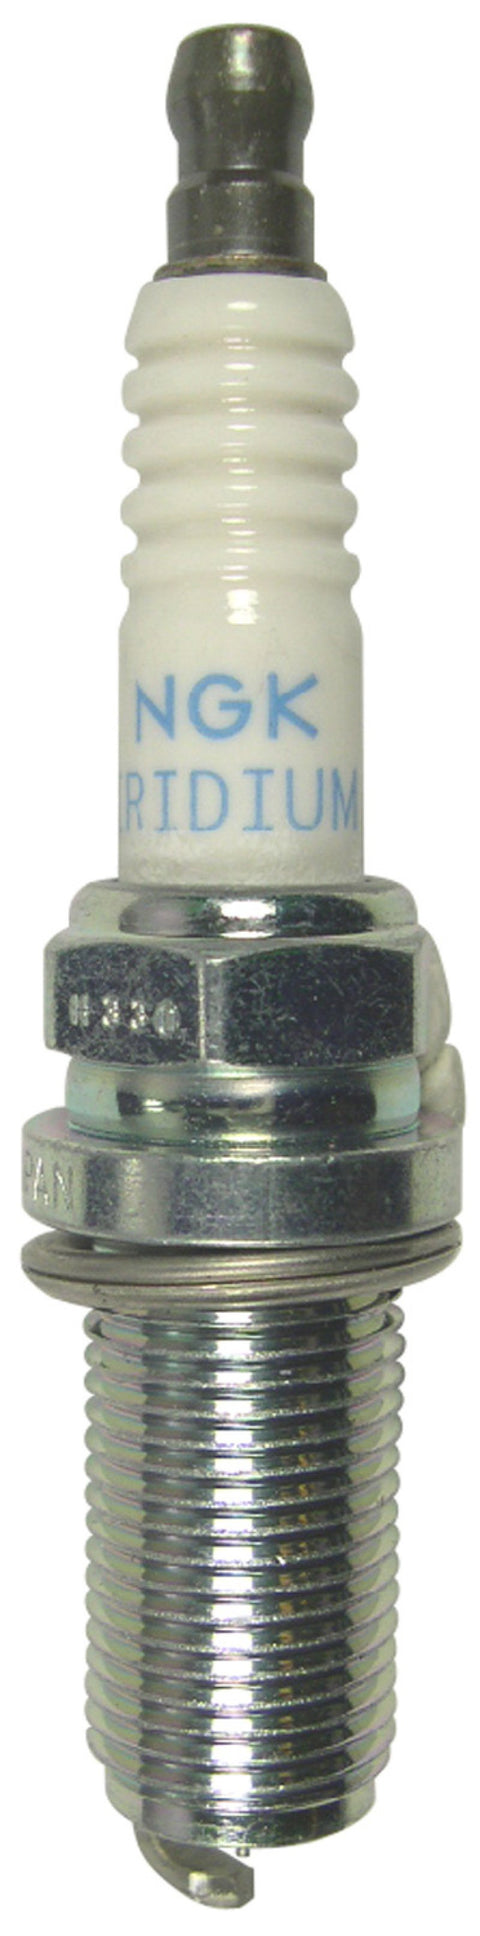 NGK Iridium Racing Spark Plug Box of 4 (4901)